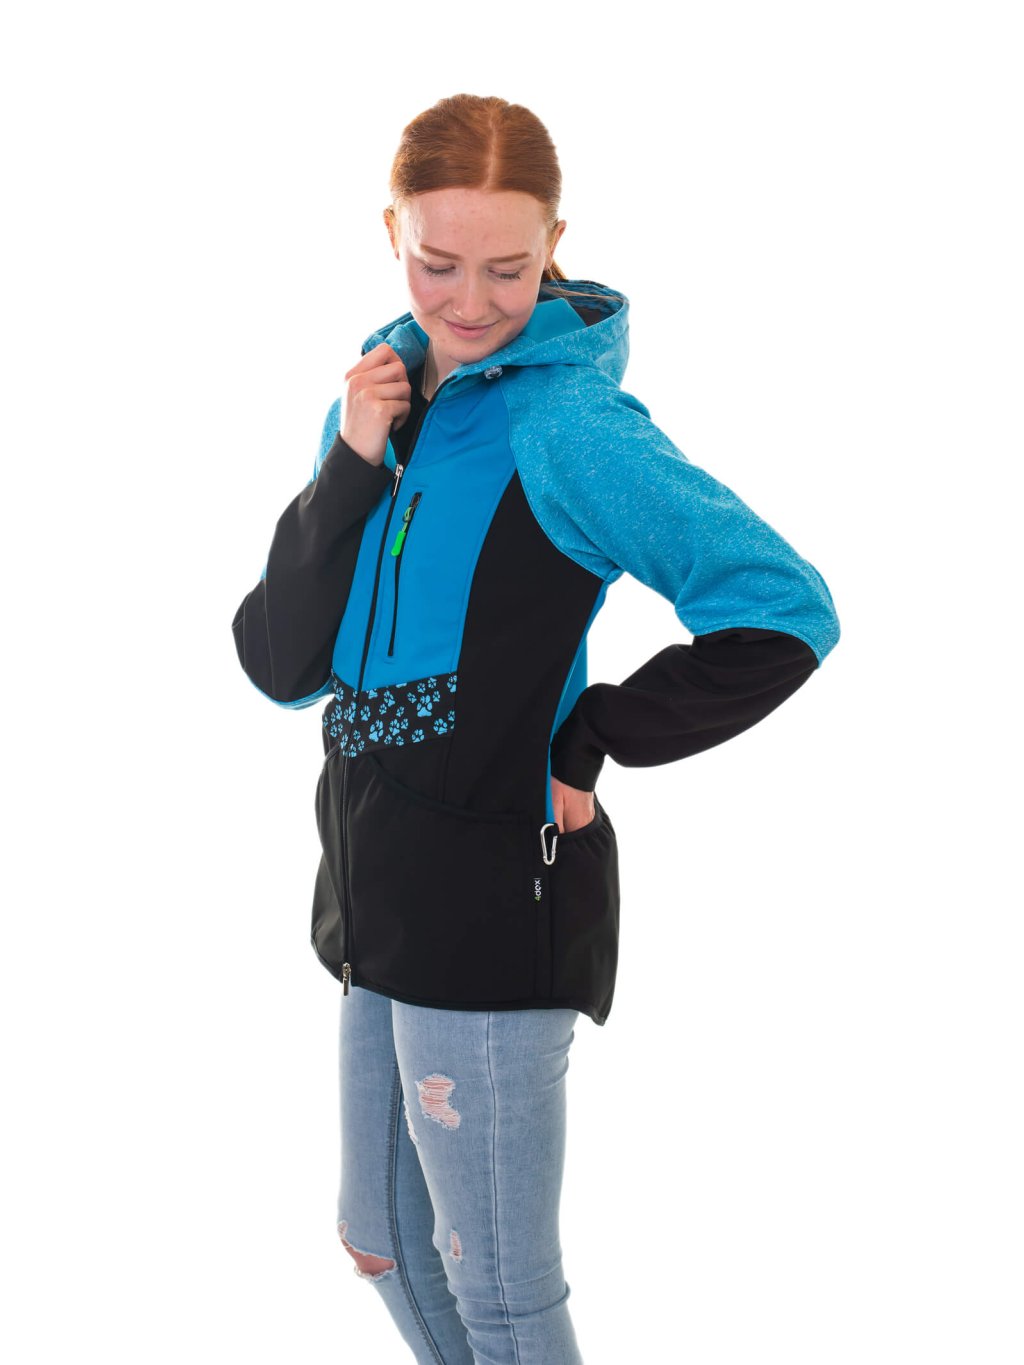 Ladies training jacket aqua all year round 4dox SALE